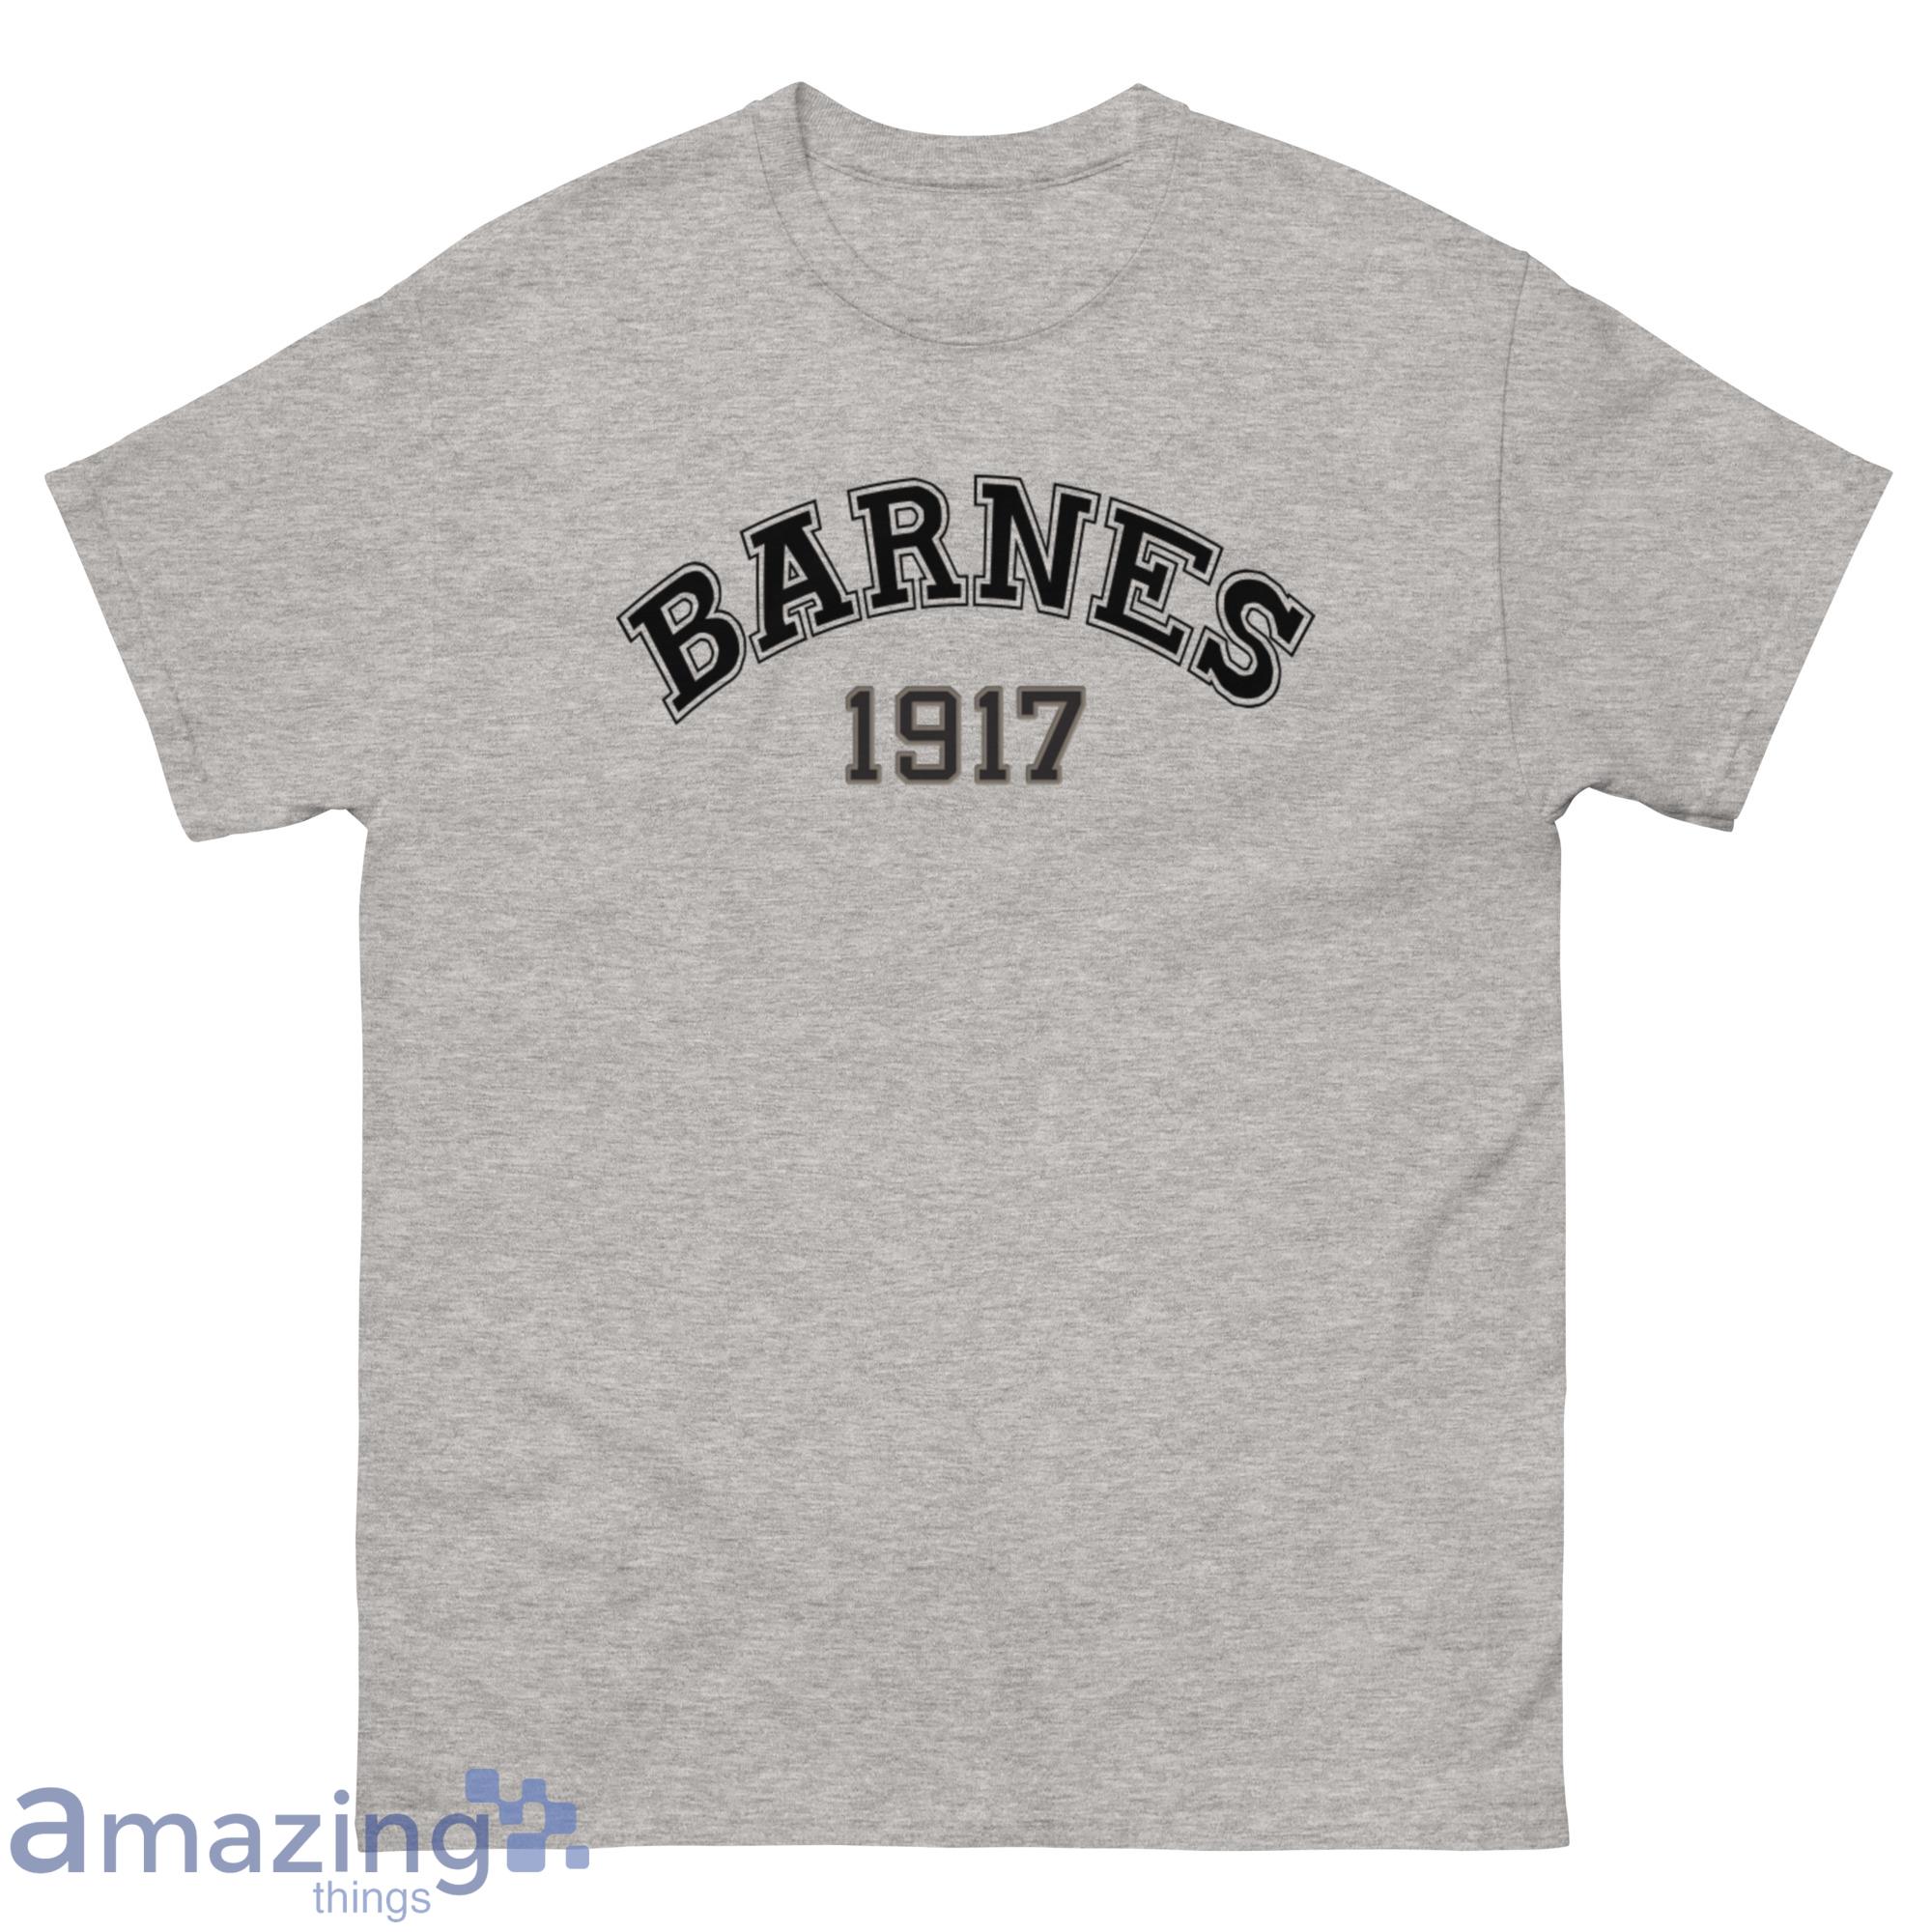 Barnes 1917 Shirt - G500 Men’s Classic T-Shirt